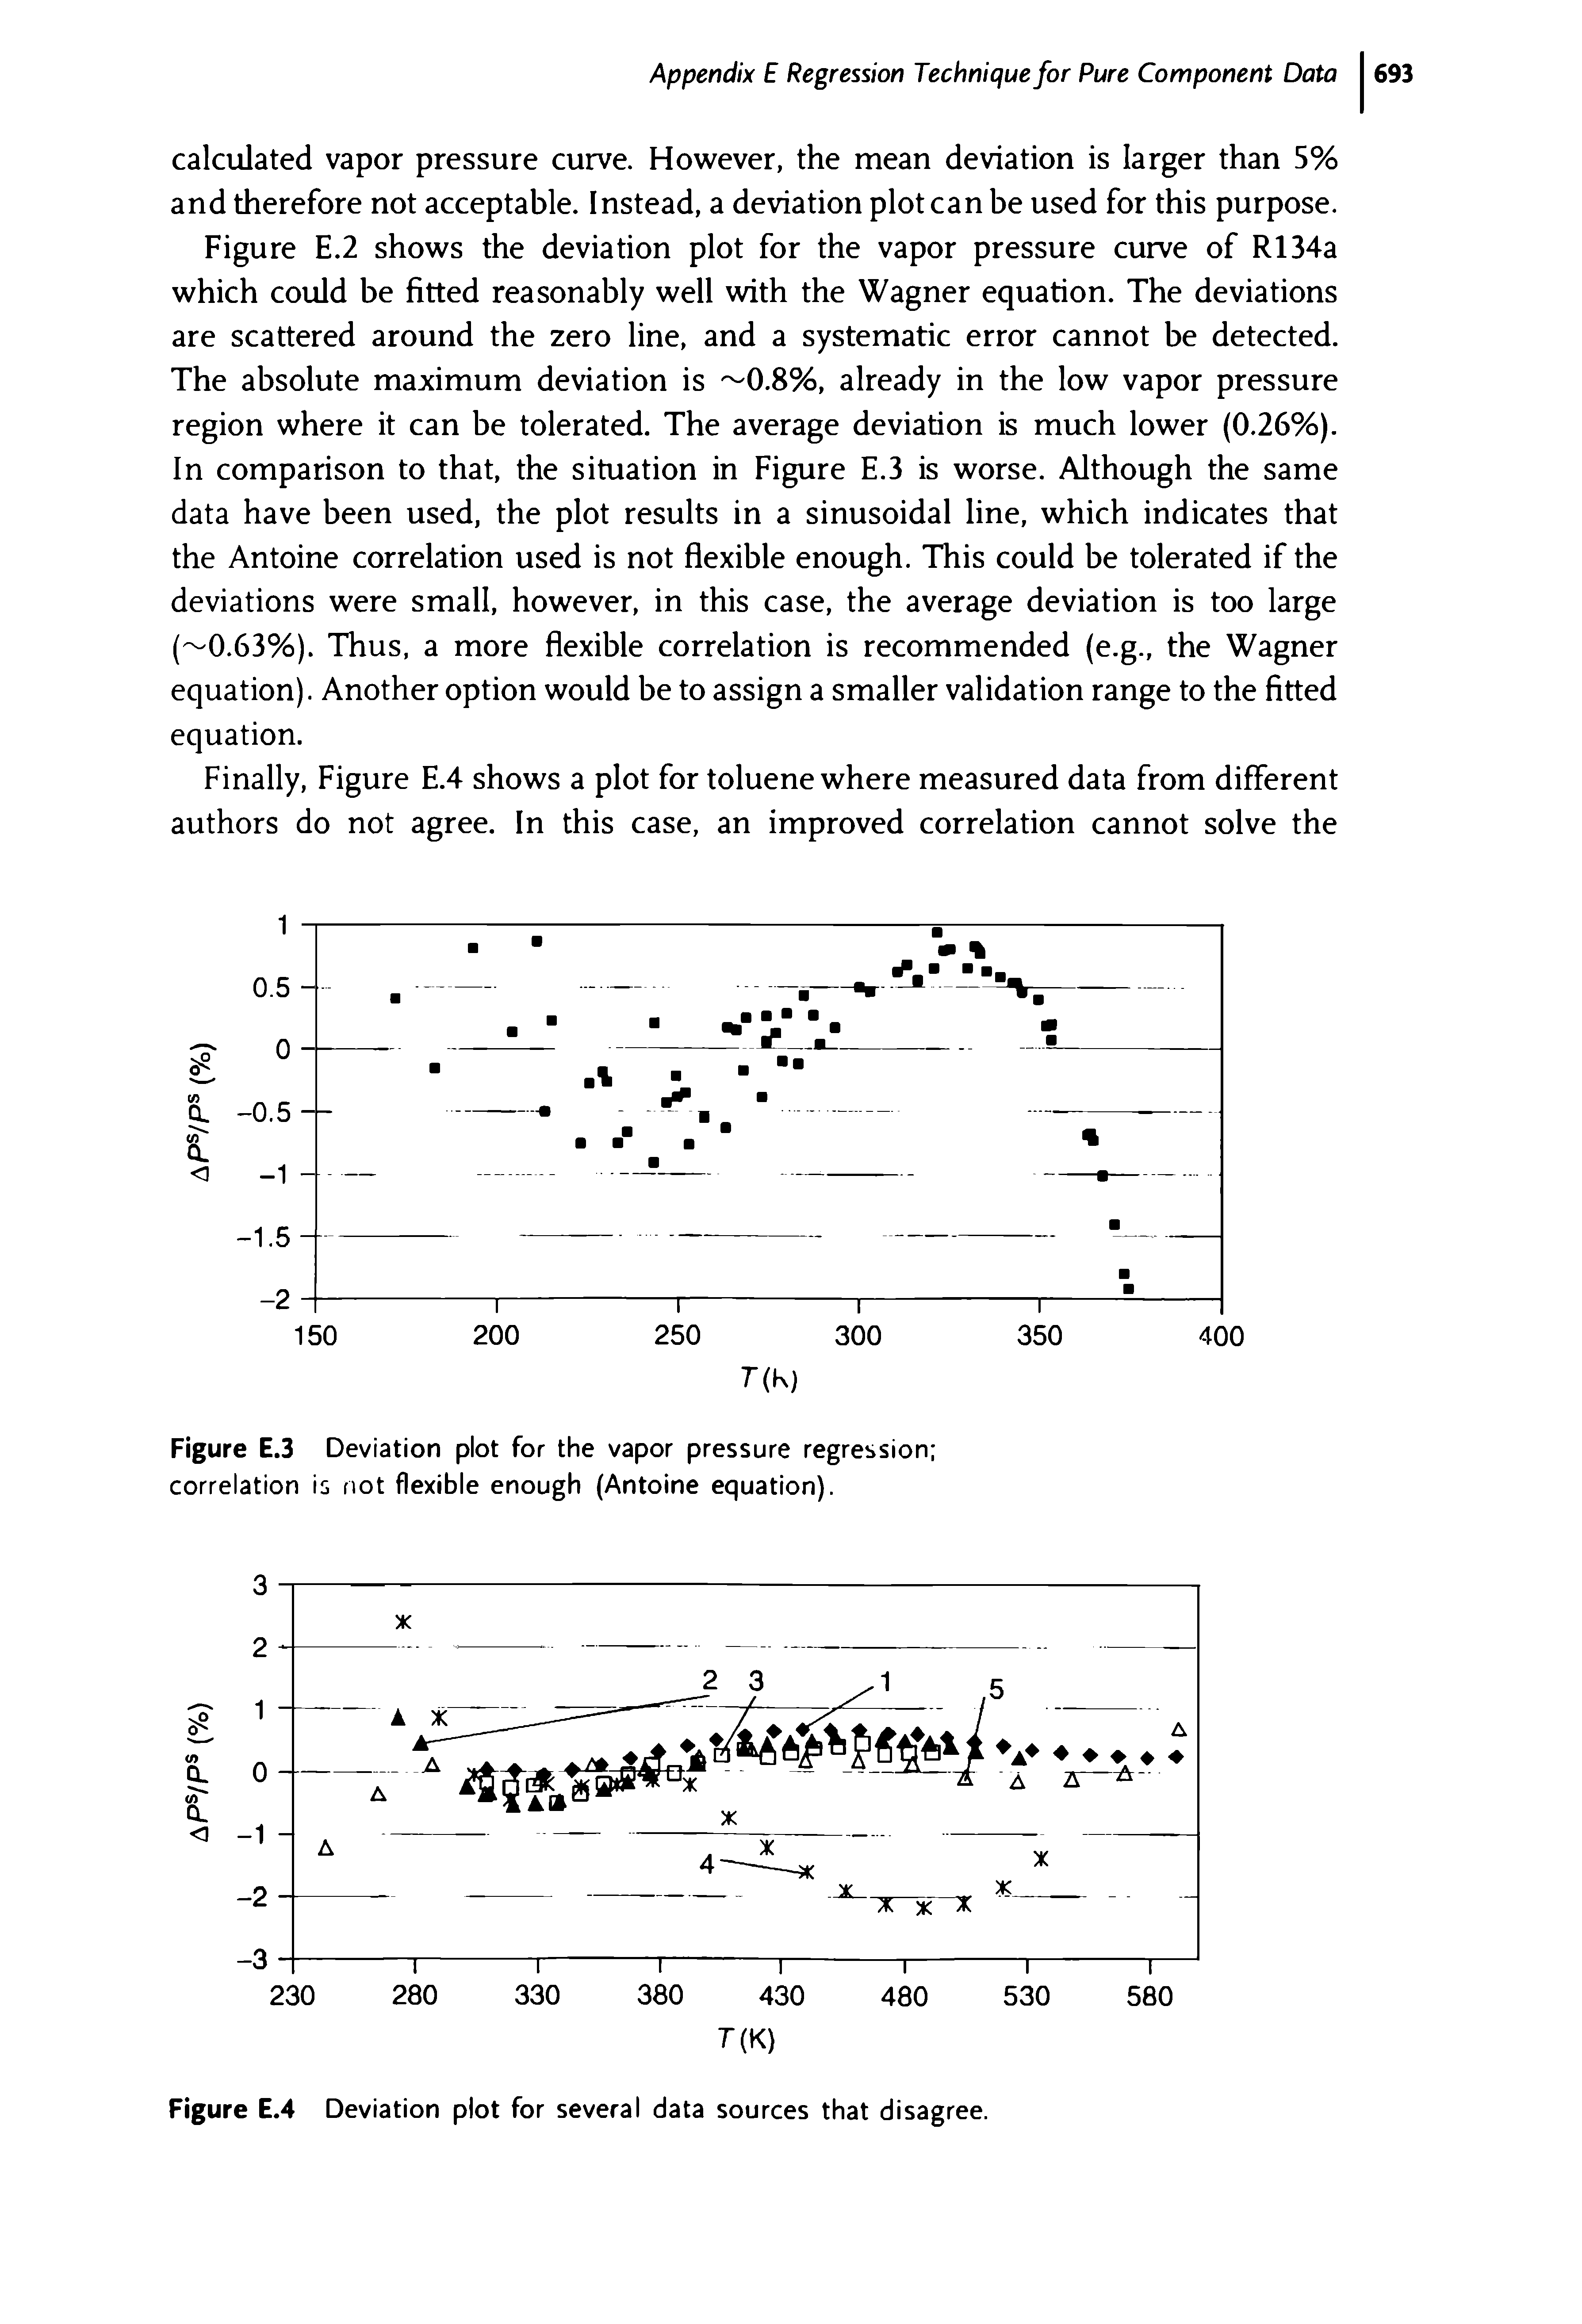 Figure E.3 Deviation plot for the vapor pressure regression correlation is not flexible enough (Antoine equation).